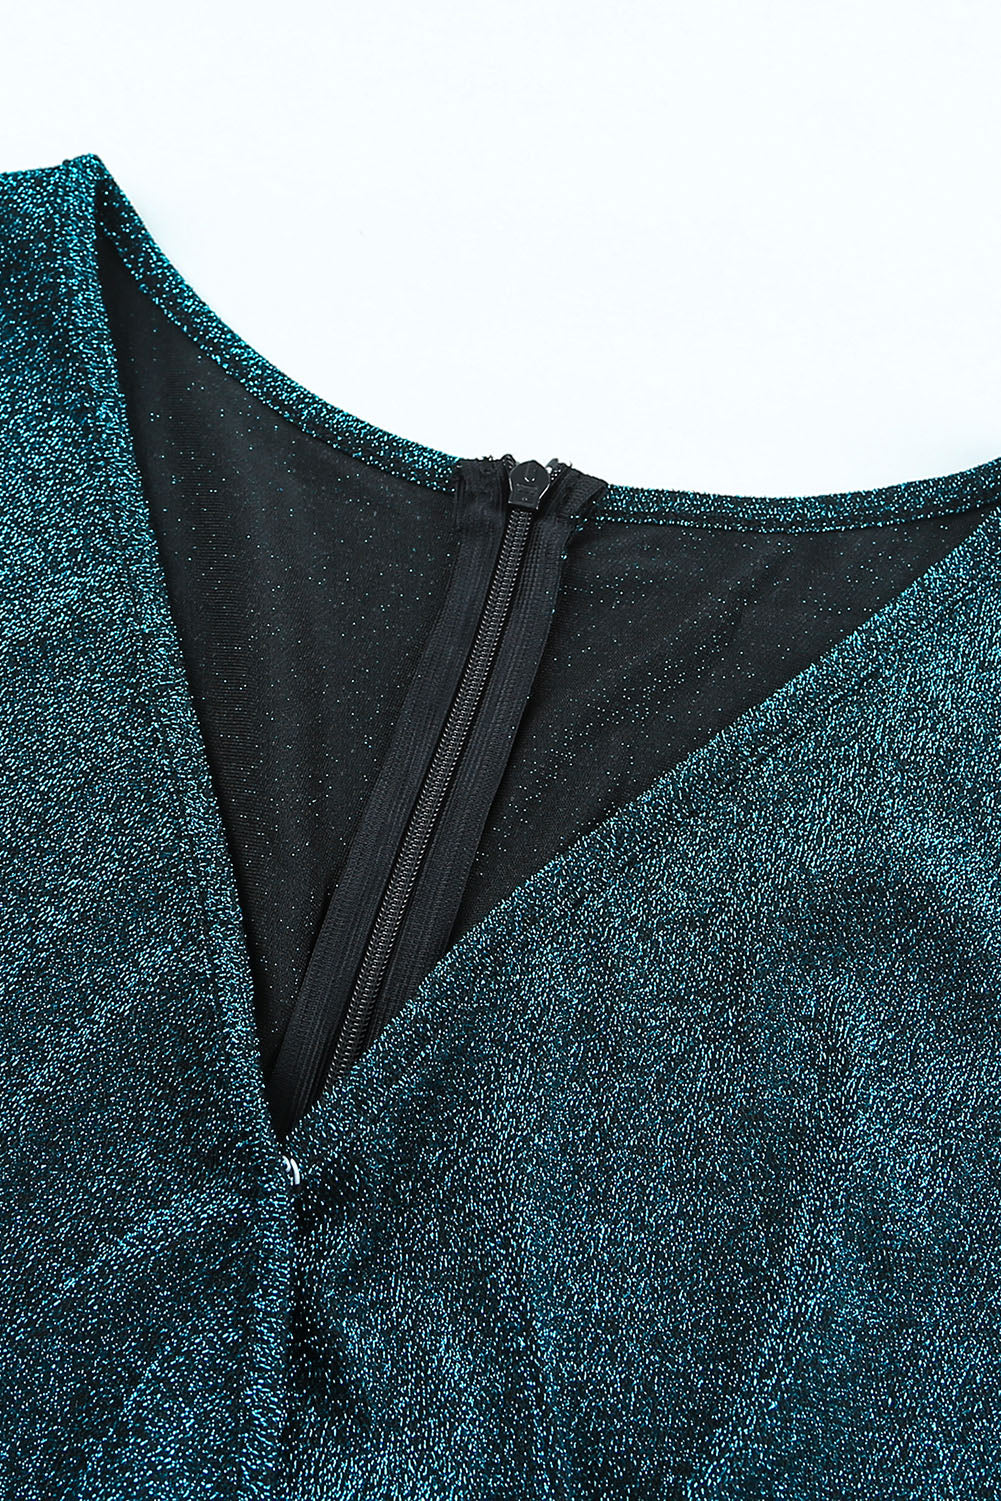 Green Glitter Wrap Over Long Sleeve Sequin Dress - EBEPEX